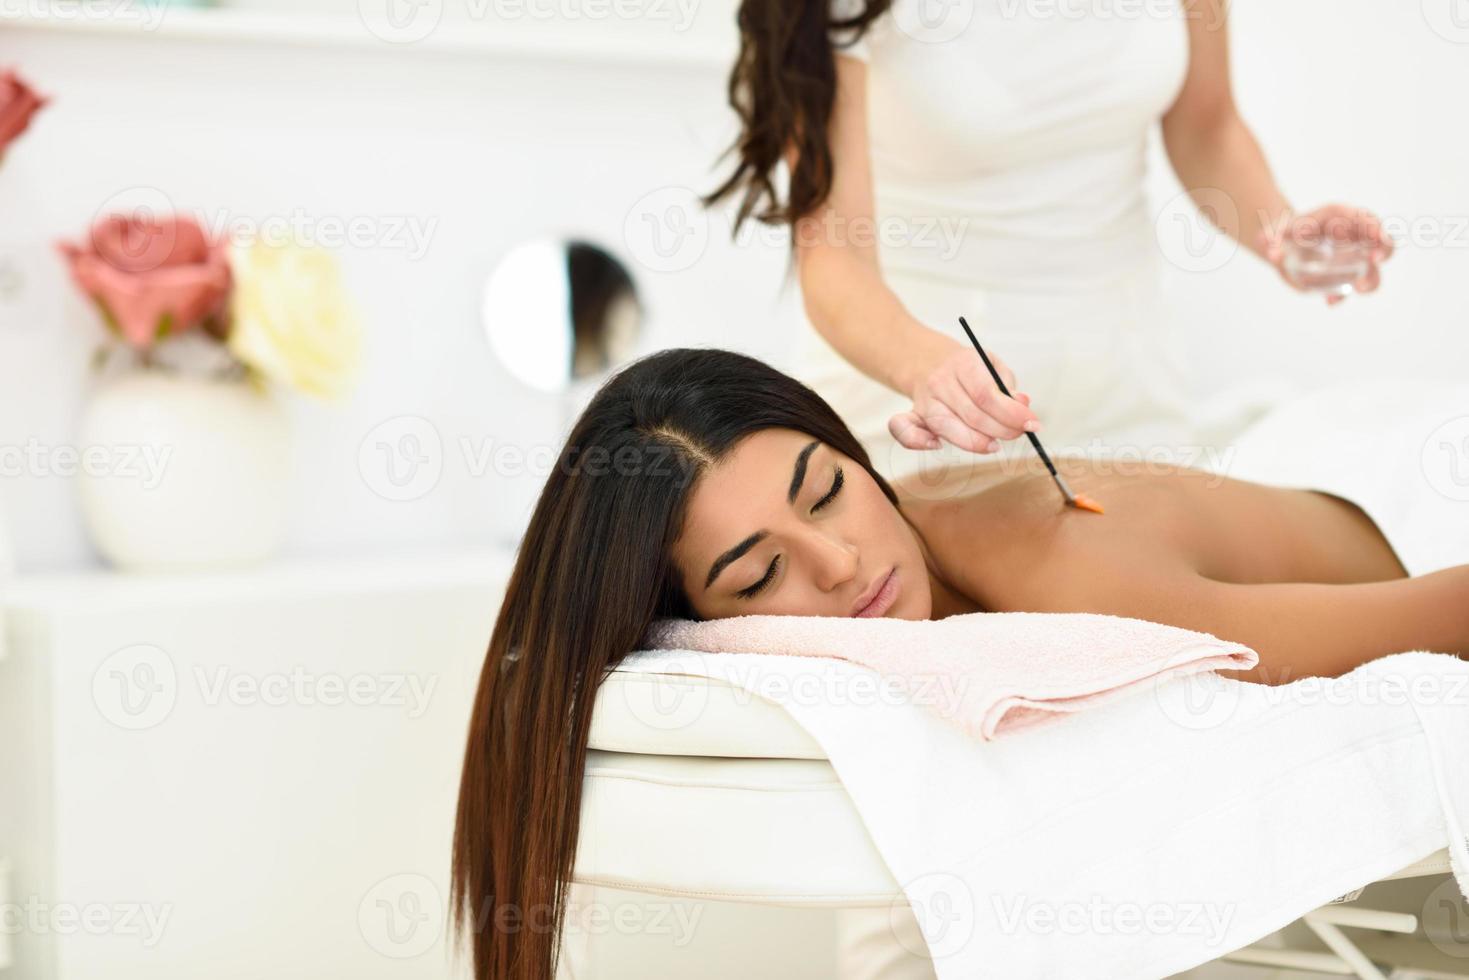 Arab woman in wellness beauty spa having aroma therapy massage photo